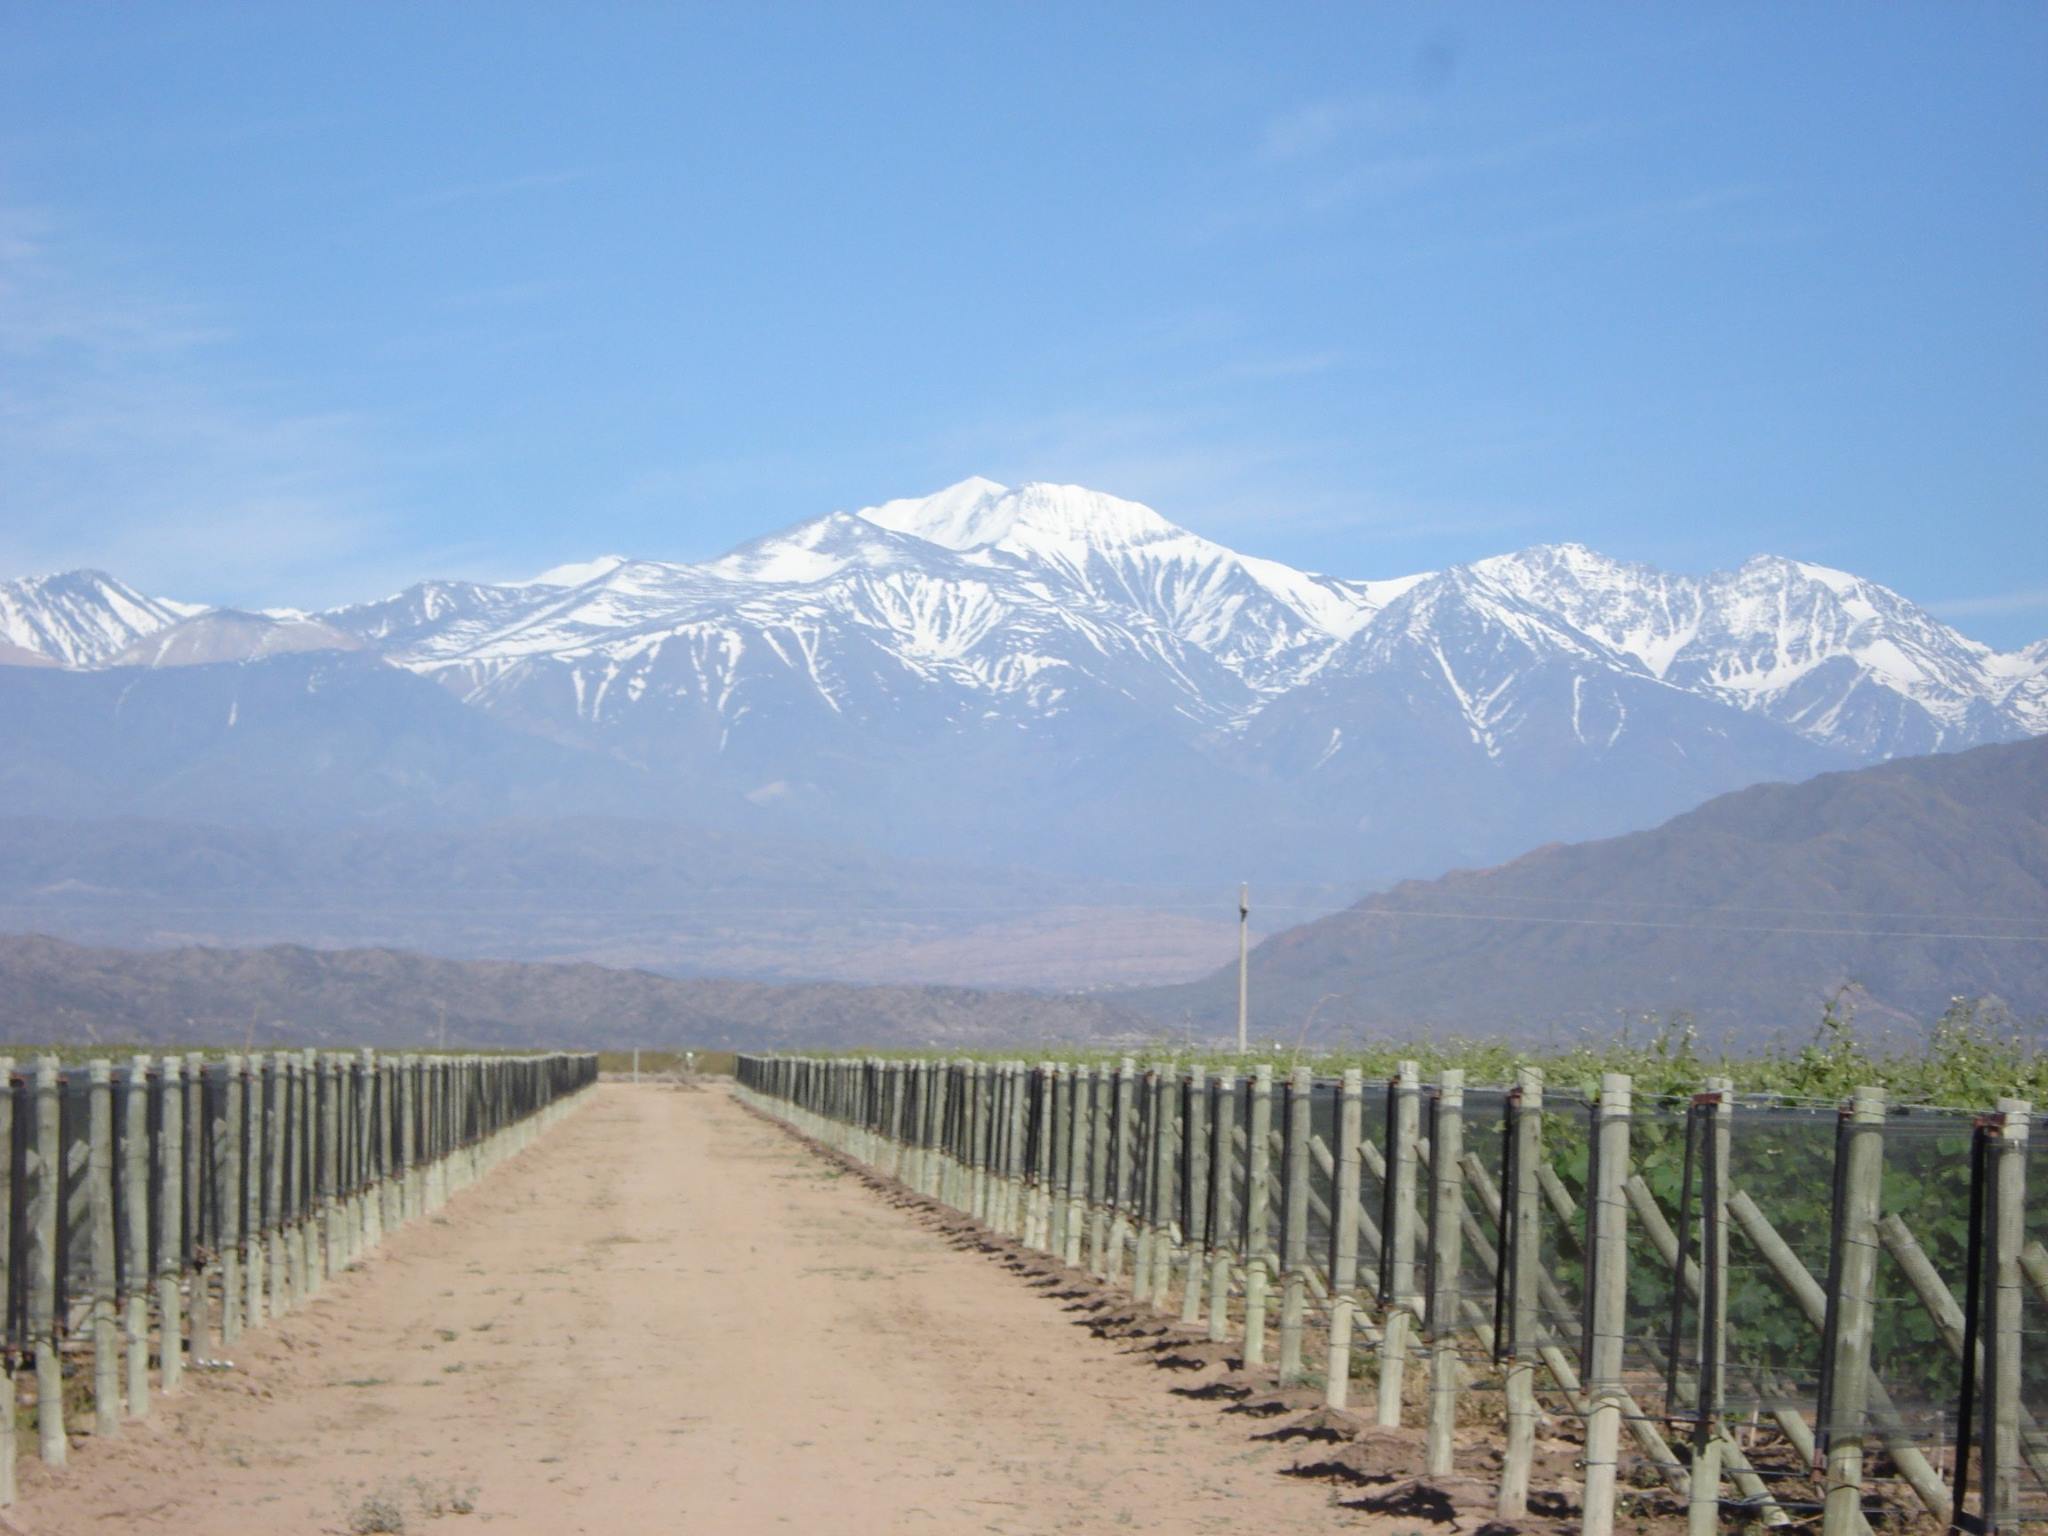 Mendoza, Argentina: History of the Region and the Famiglia Meschini Winery